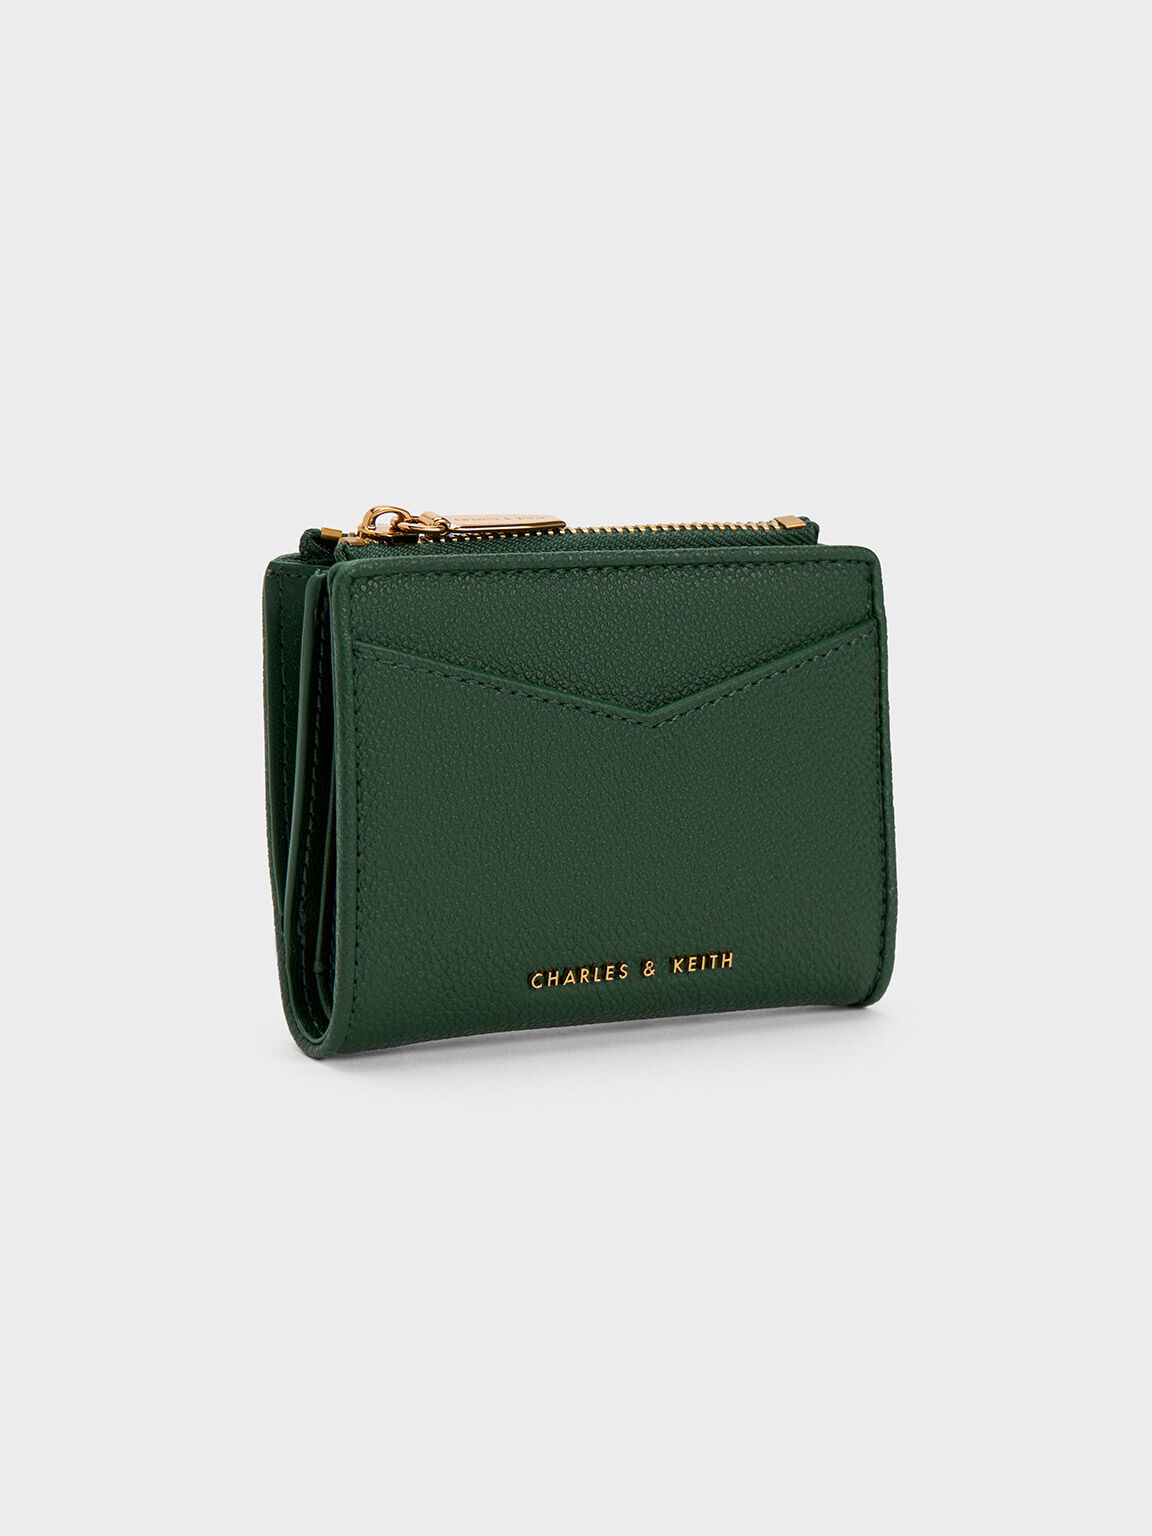 Cayce Short Wallet, Dark Green, hi-res